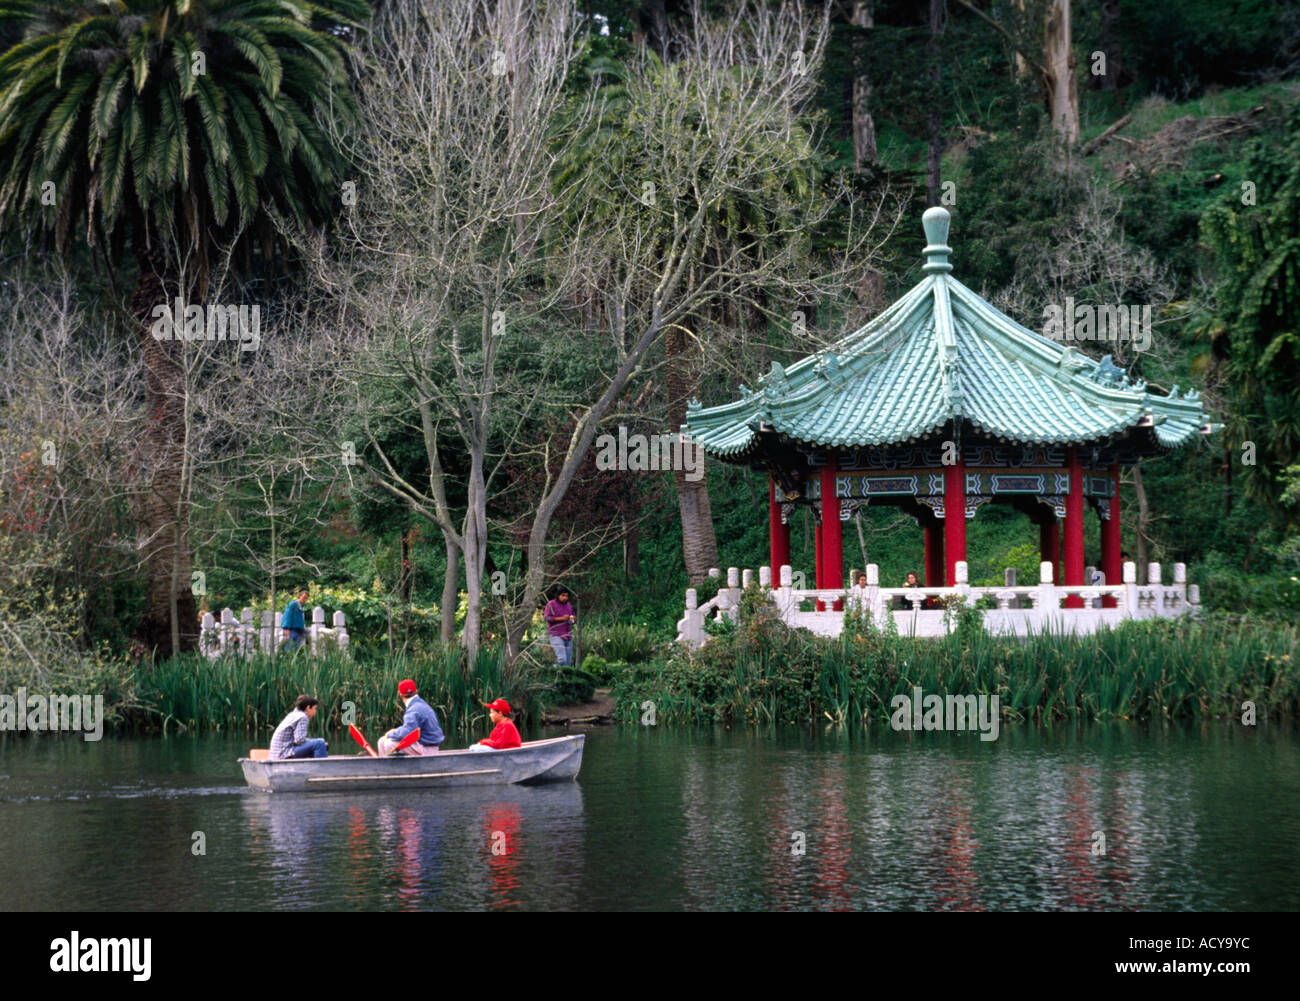 Boating On Lake At Japanese Tea Garden In Golden Gate Park San